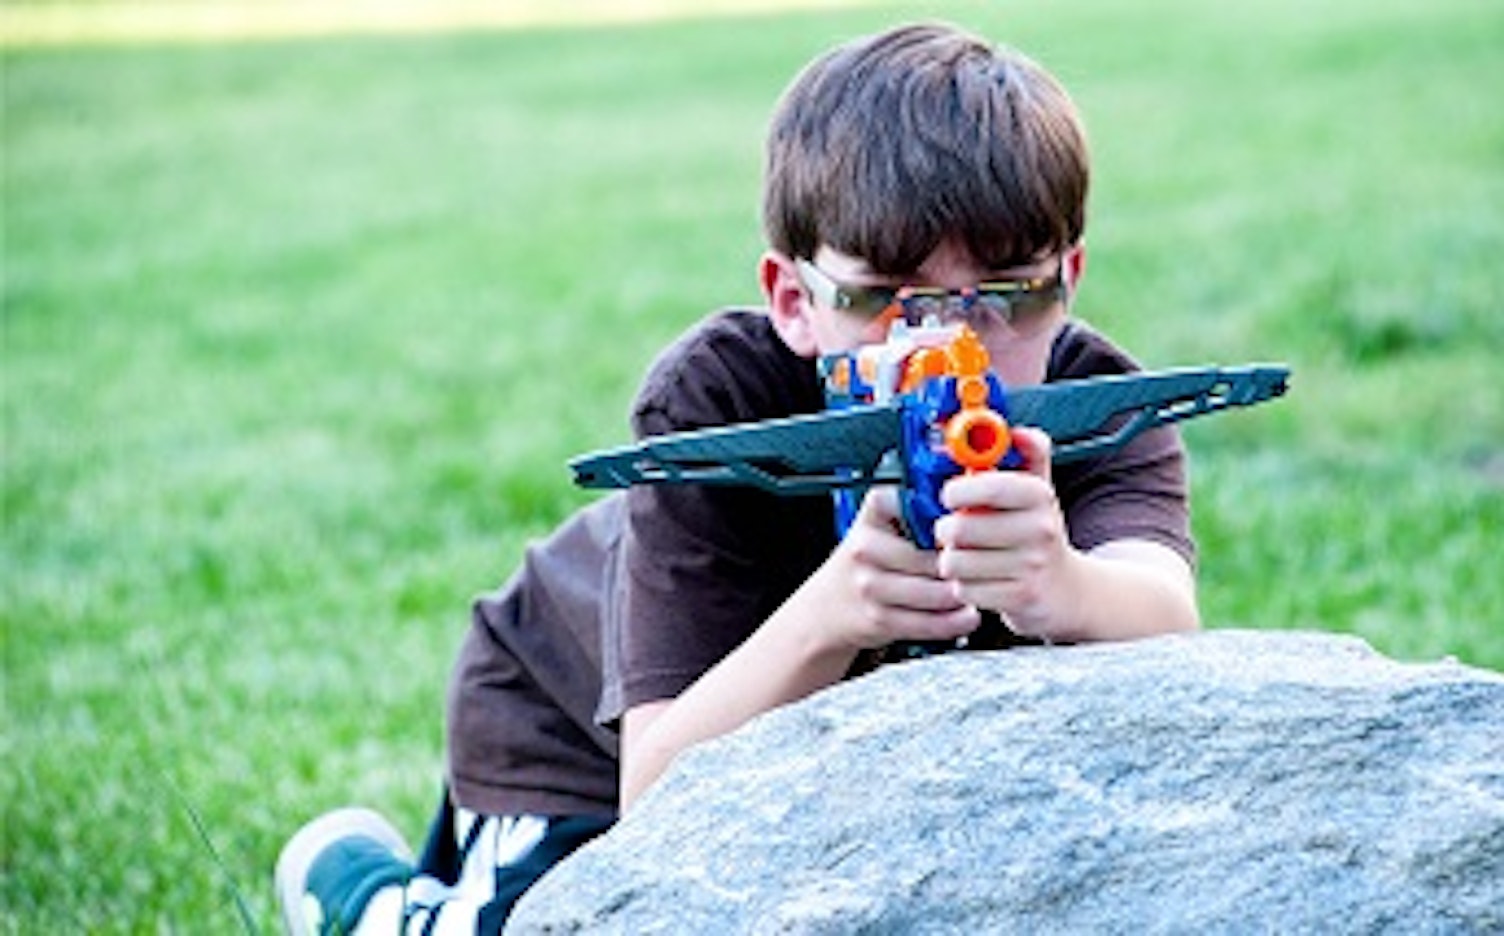 orig boy in sunglasses holding toy gun